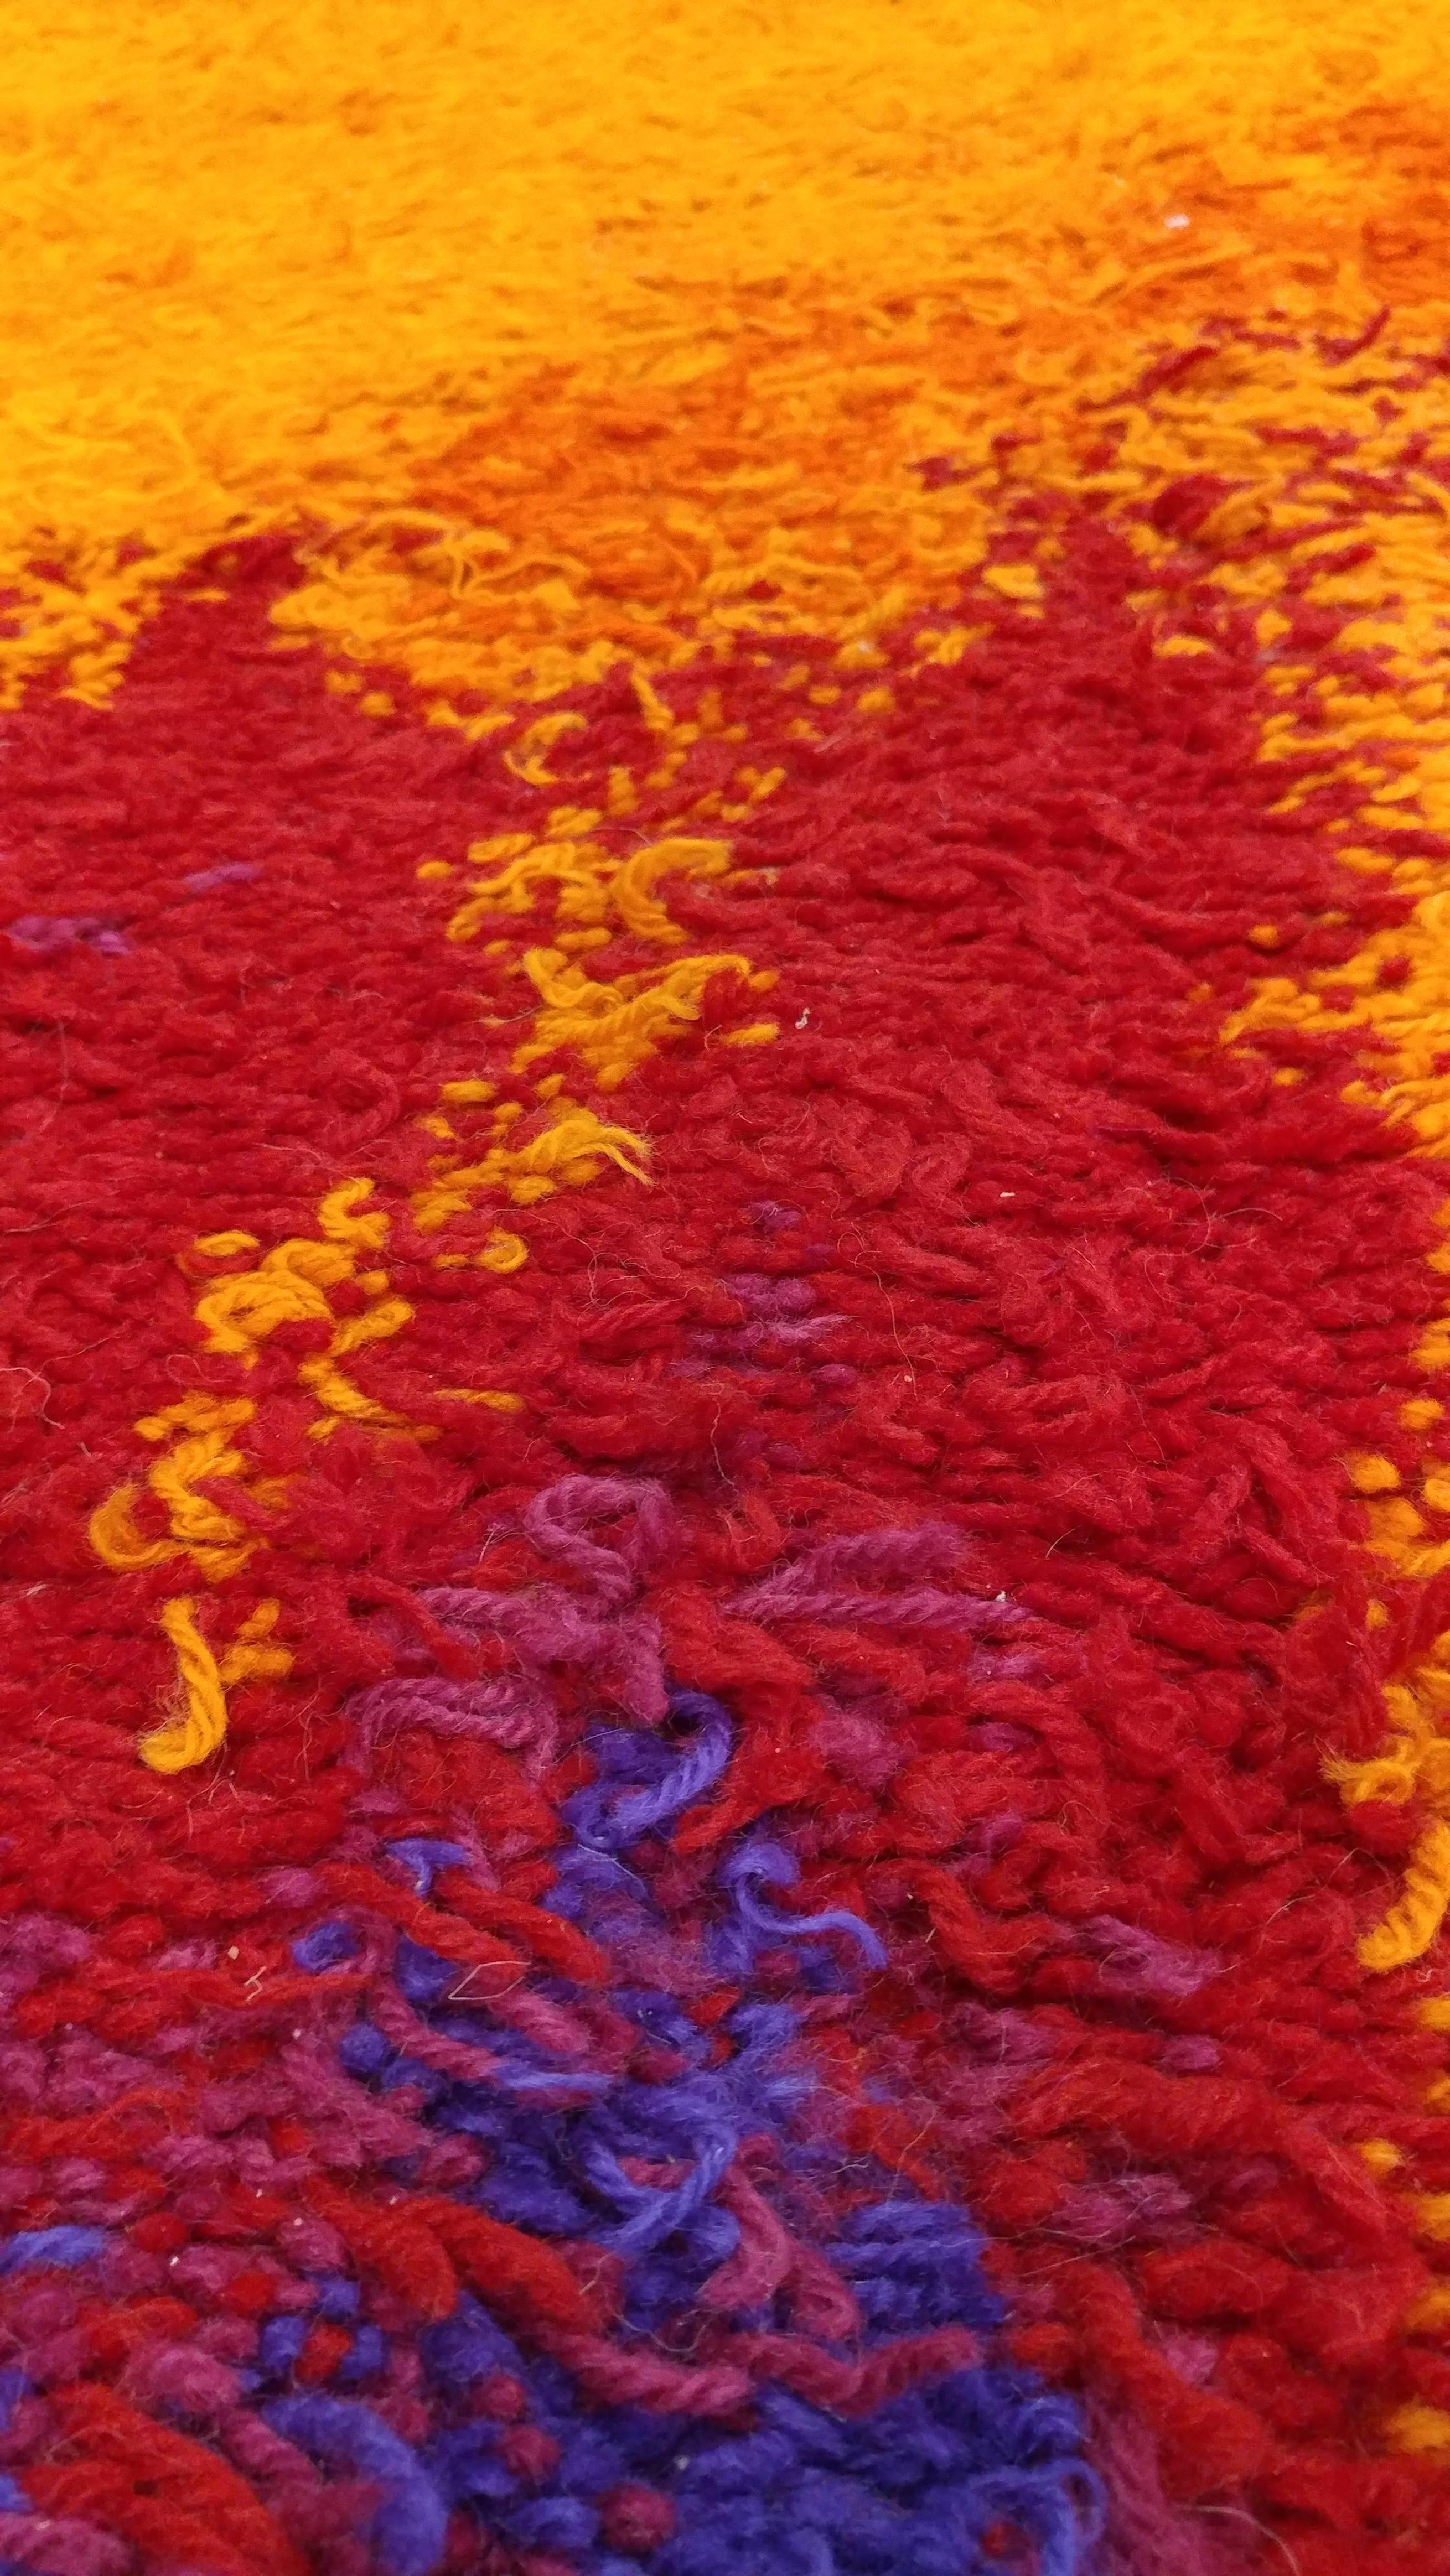 1960s Swedish Rya rug with a colorful, plush wool pile. Size: 4'6